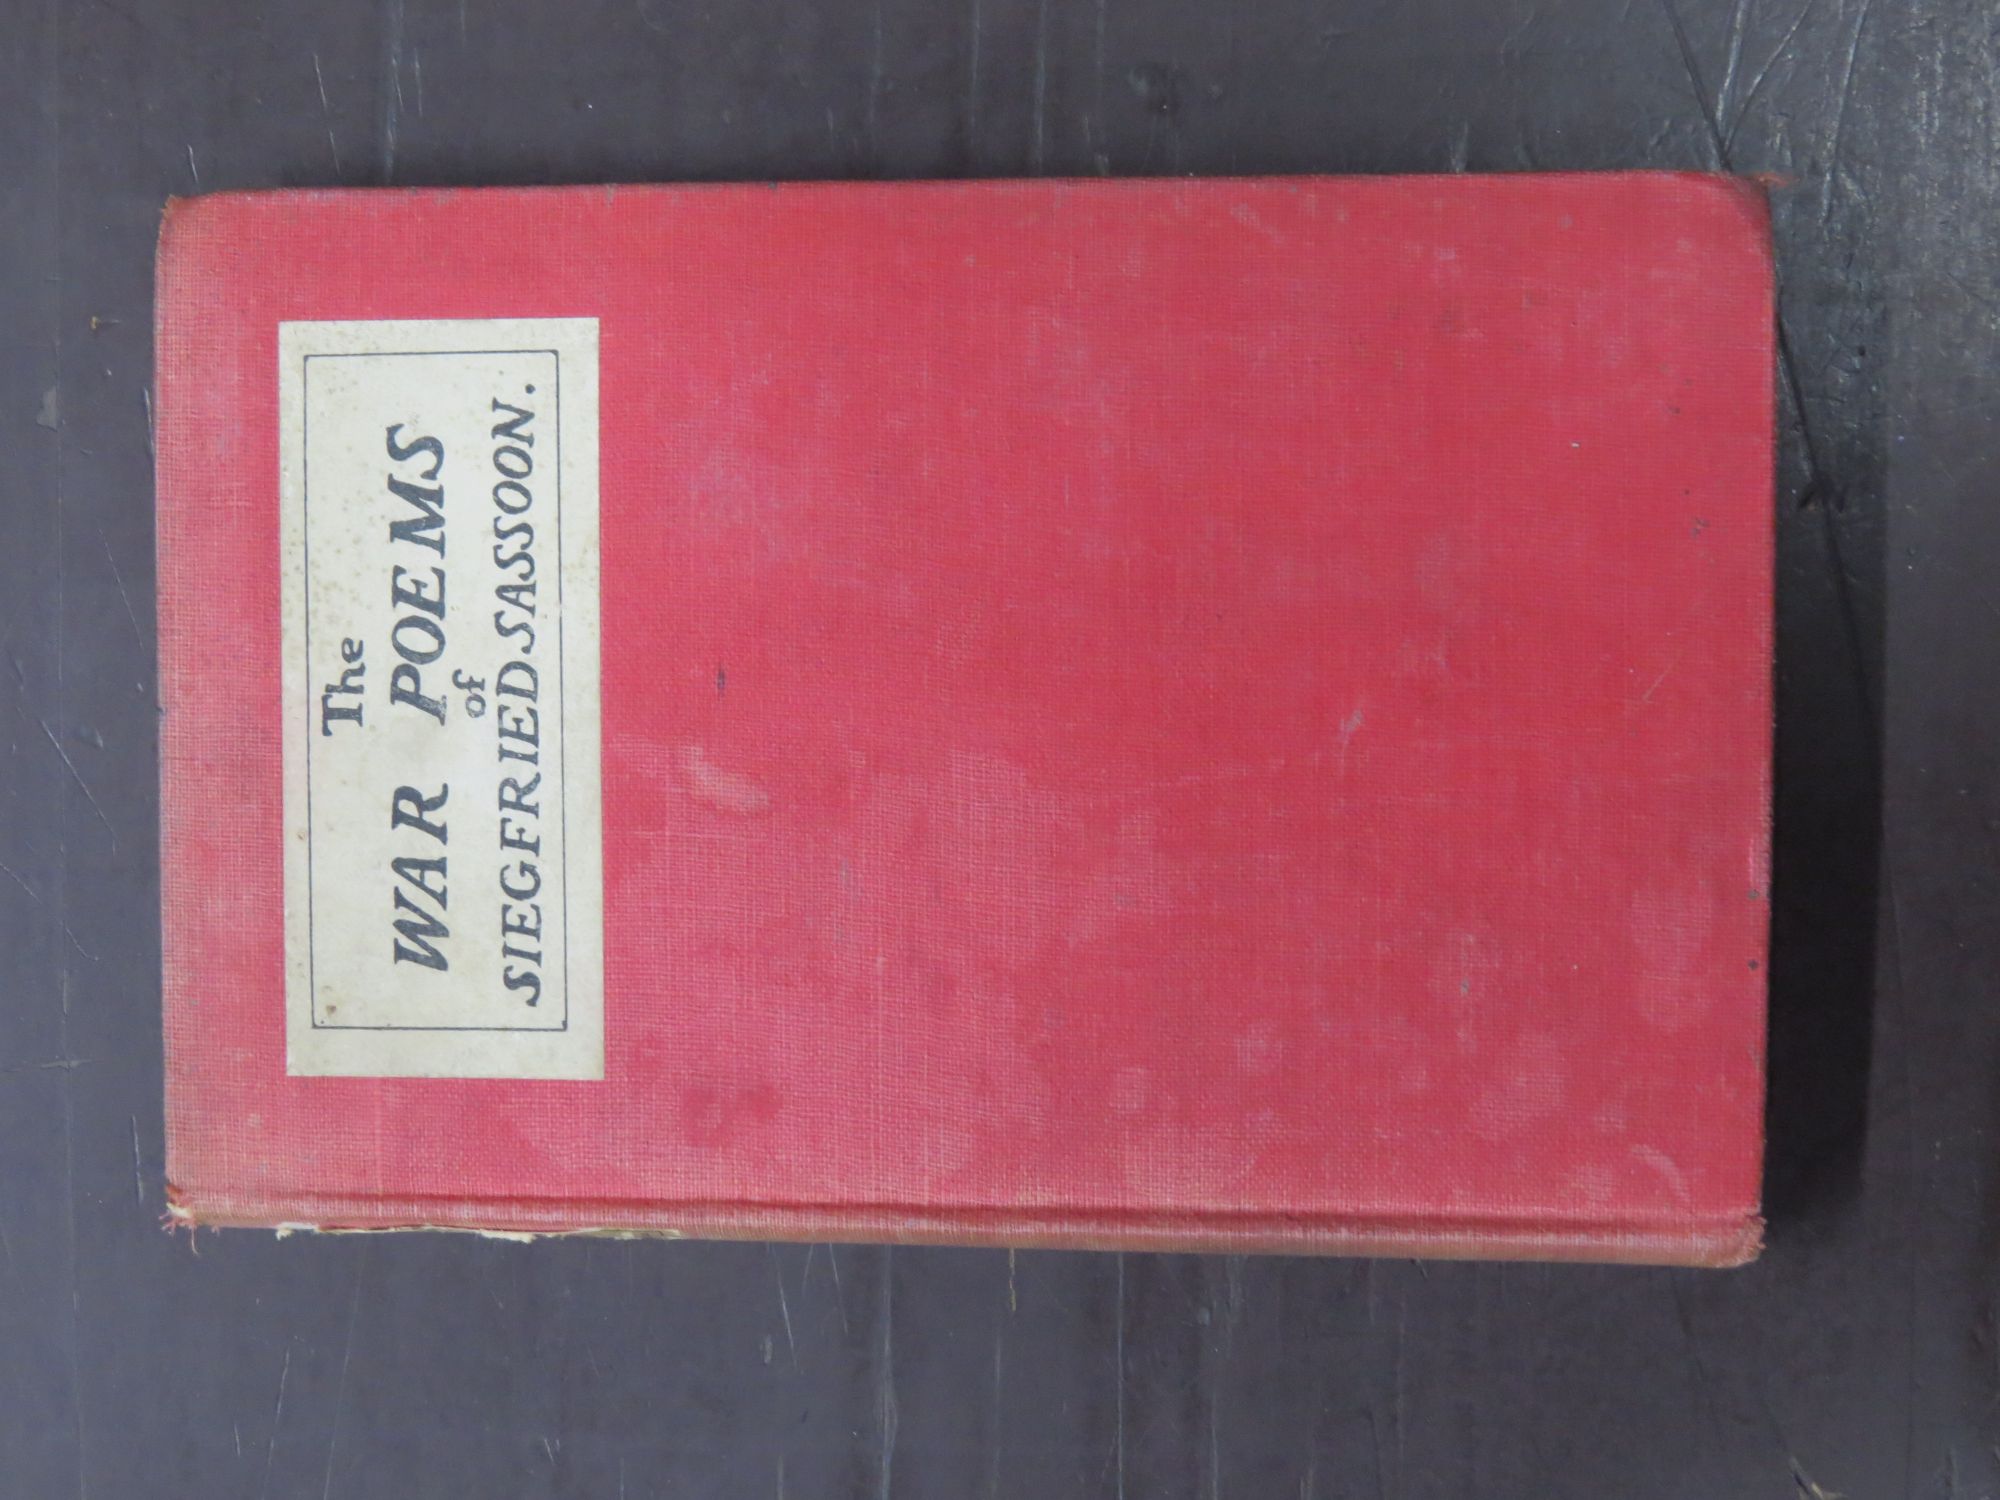 Siegfried Sassoon, The War Poems of, Heinemann, London, New Impression, reprint 1920 (1920), Poetry, Literature, Dead Souls Bookshop, Dunedin Book Shop